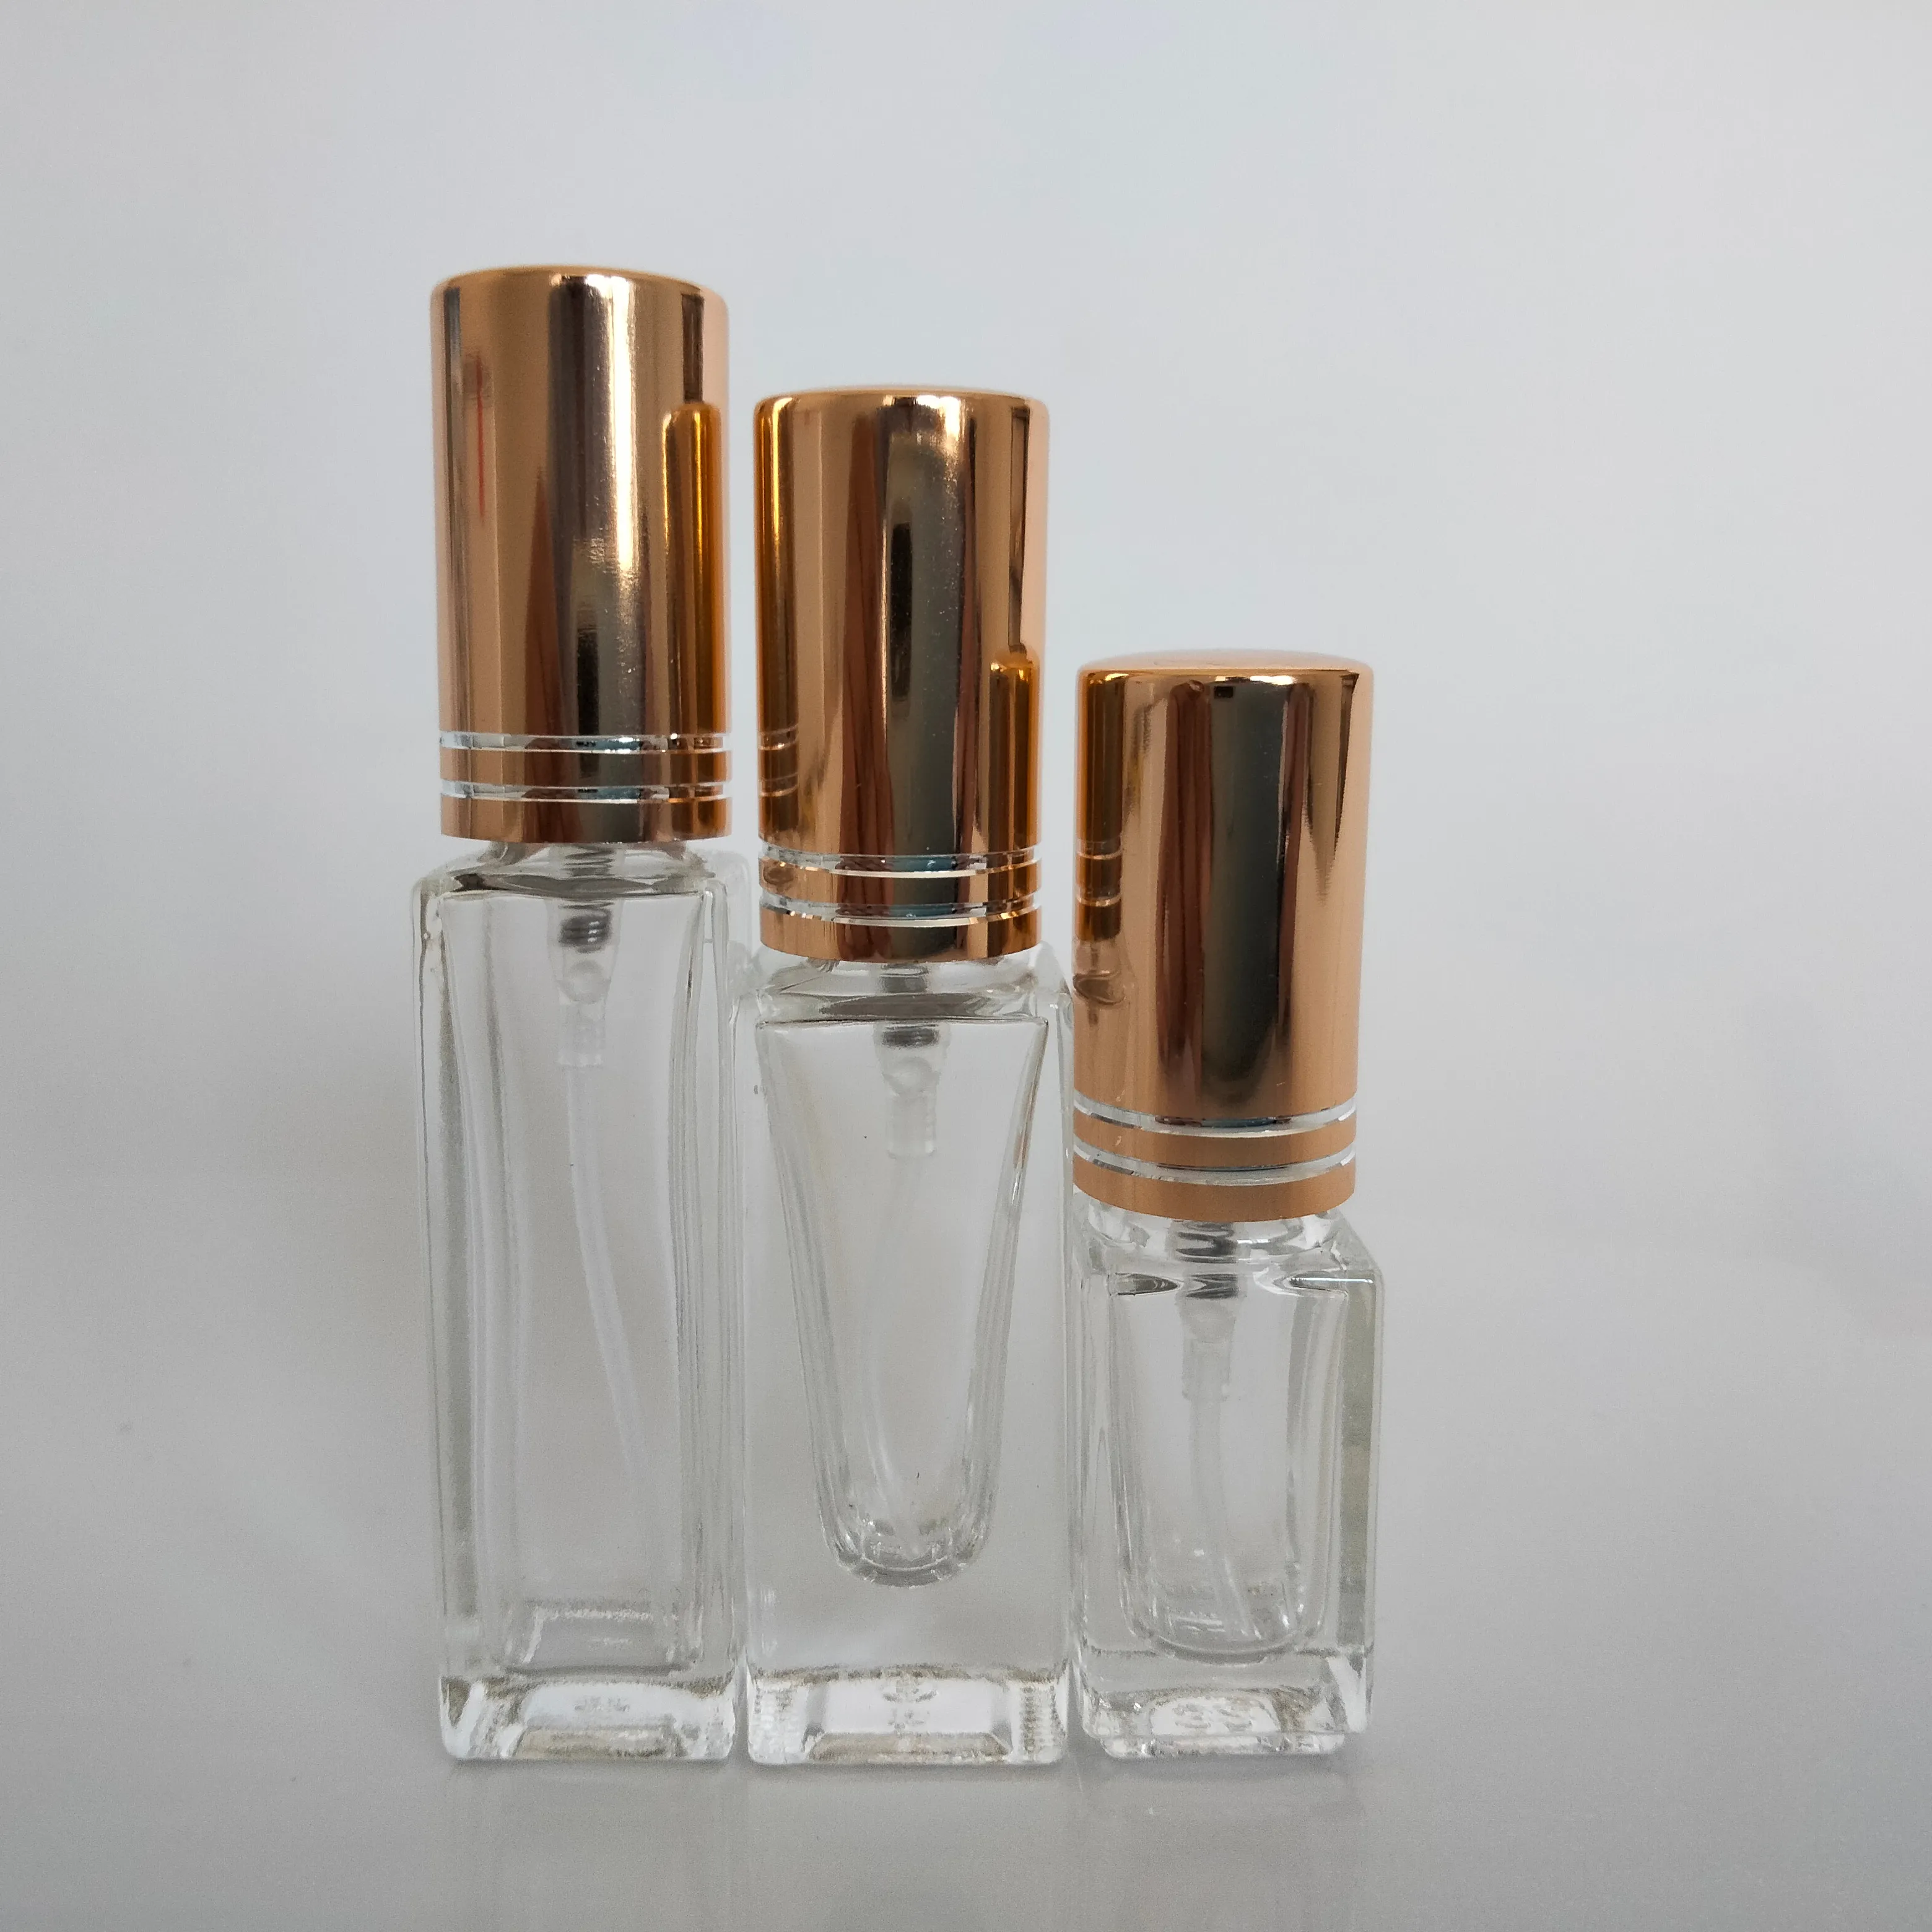 2ml 3ml 5ml 8ml 10ml Atomizer Glass Perfume Sample Bottles Cosmetic Glass Perfume Gift Bottle